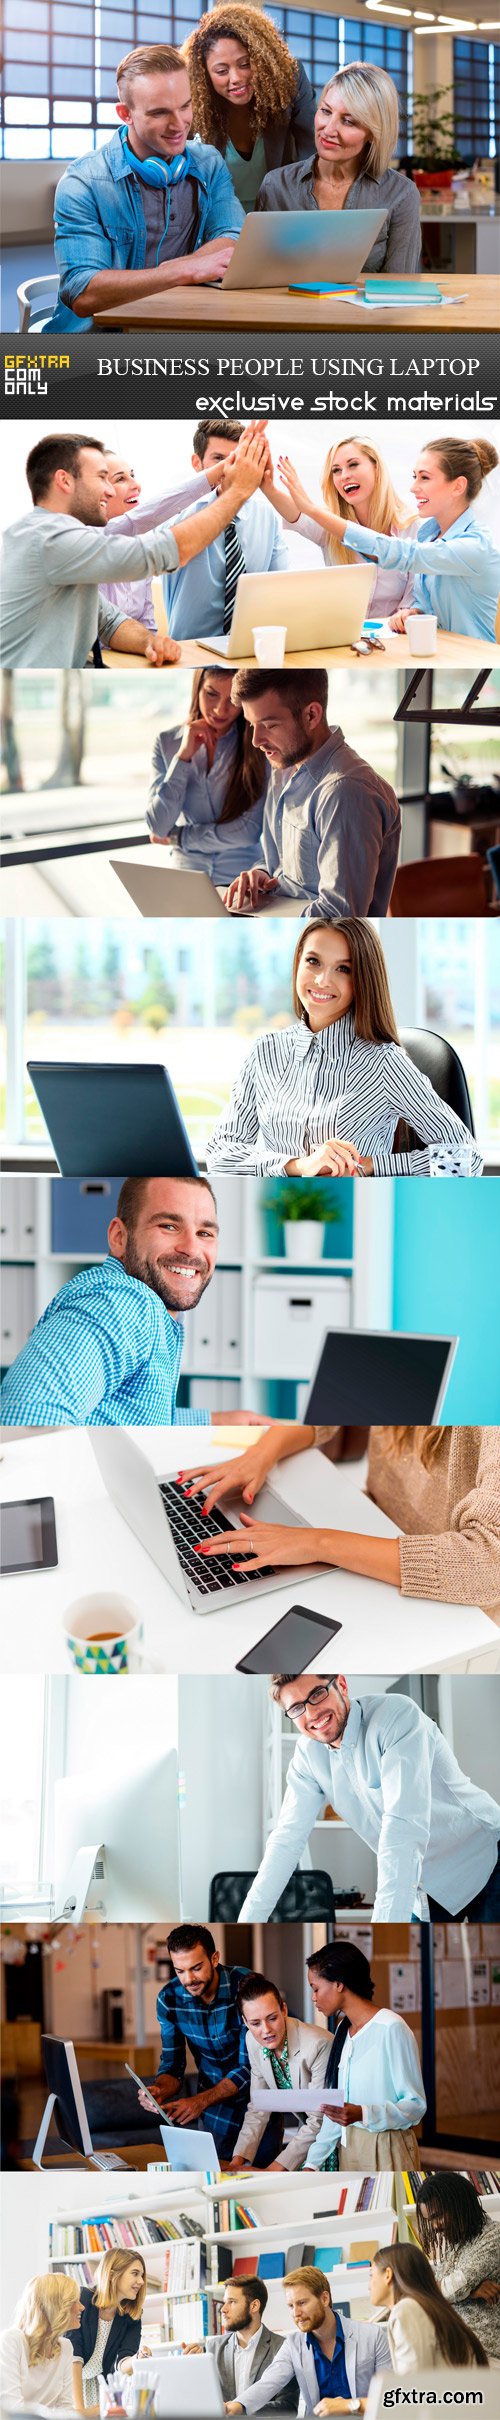 Business people using laptop - 9 UHQ JPEG